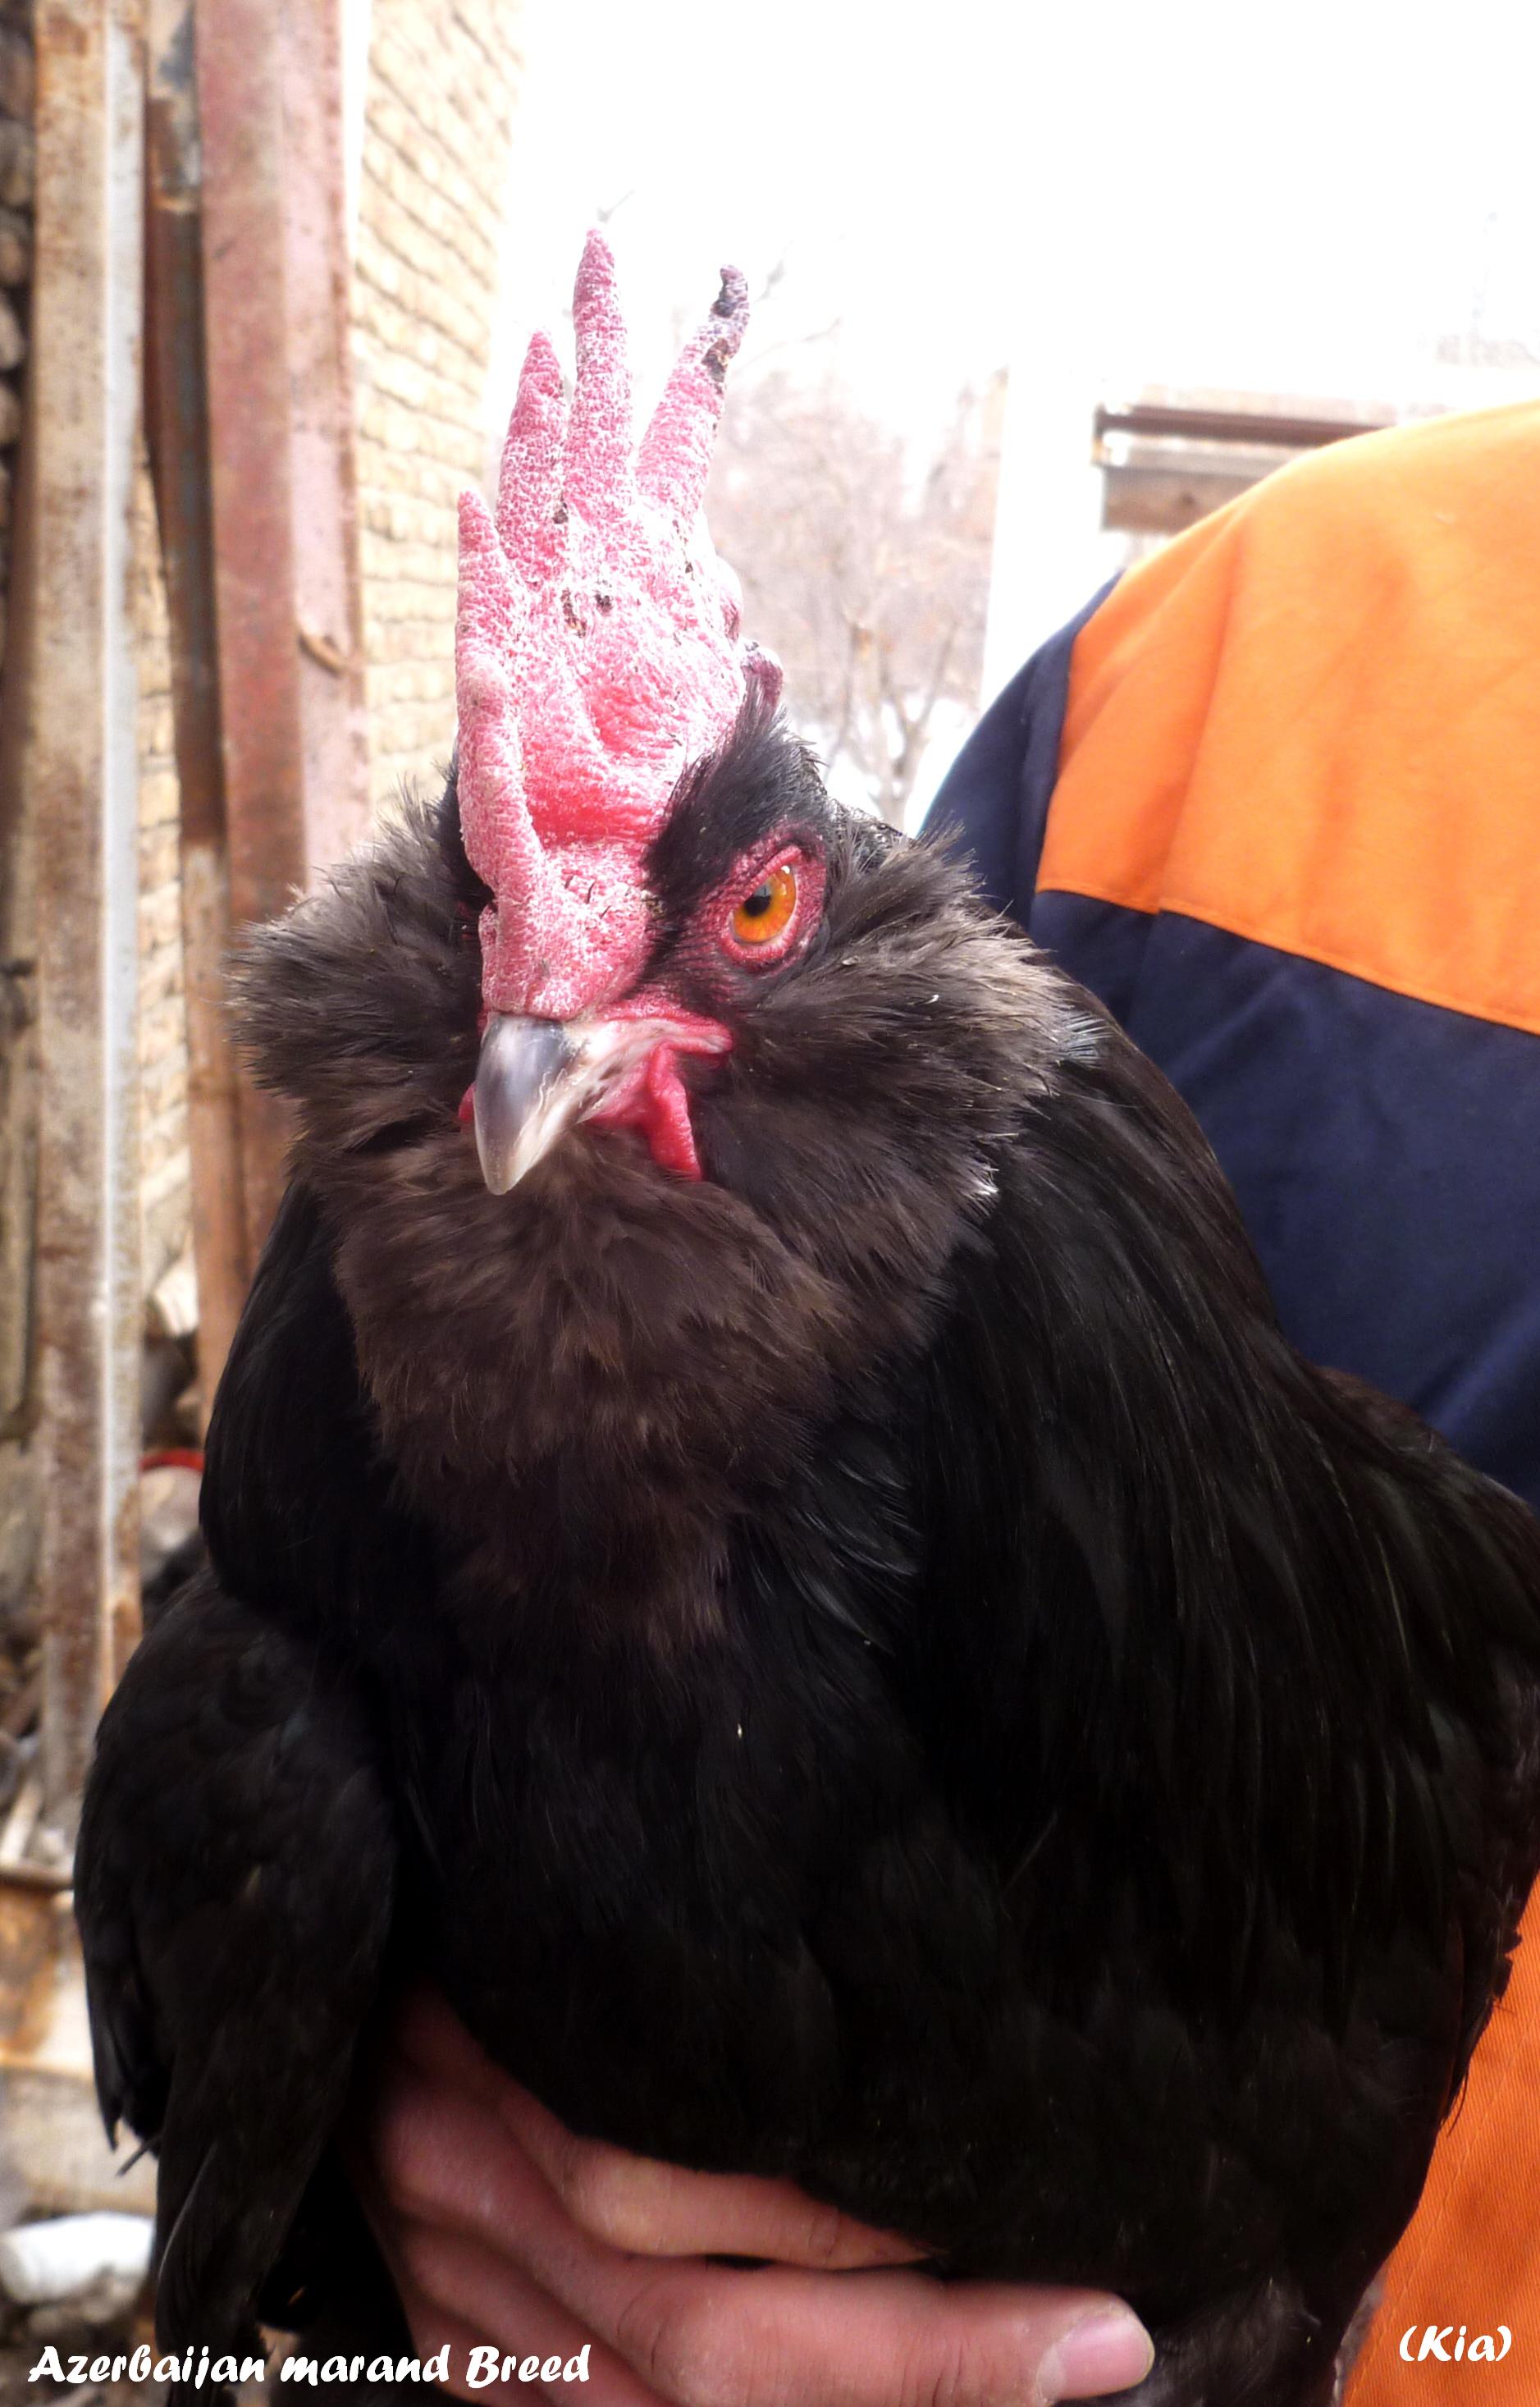 AZERBAIJAN MARAND 
Rare Breed Poultry
black Azerbaijan